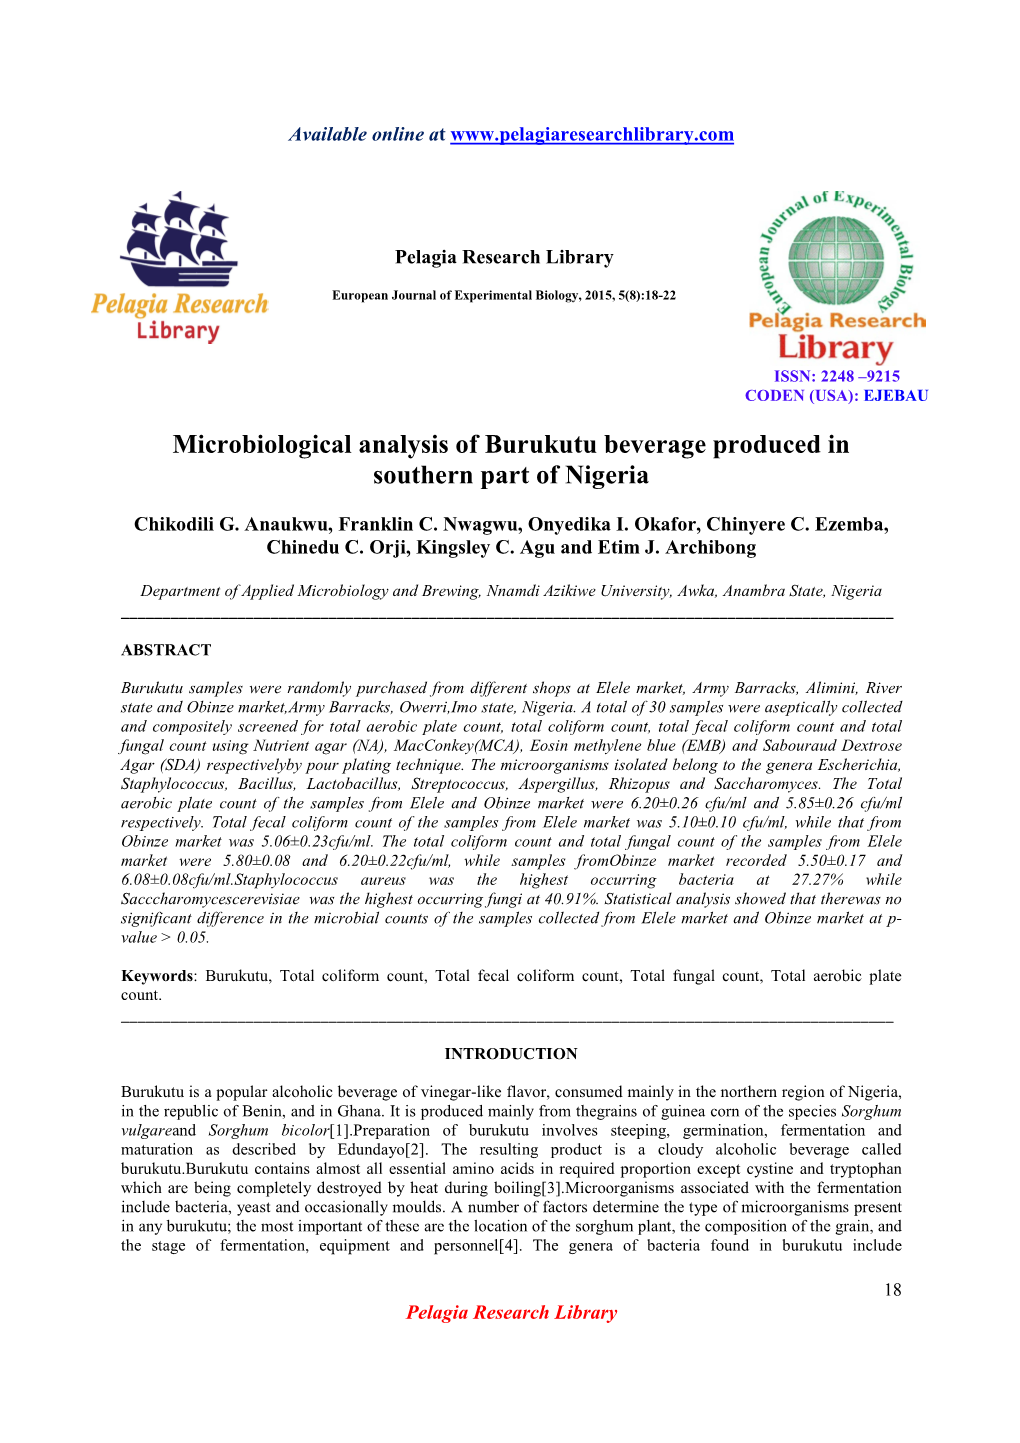 Microbiological Analysis of Burukutu Beverage Produced in Southern Part of Nigeria